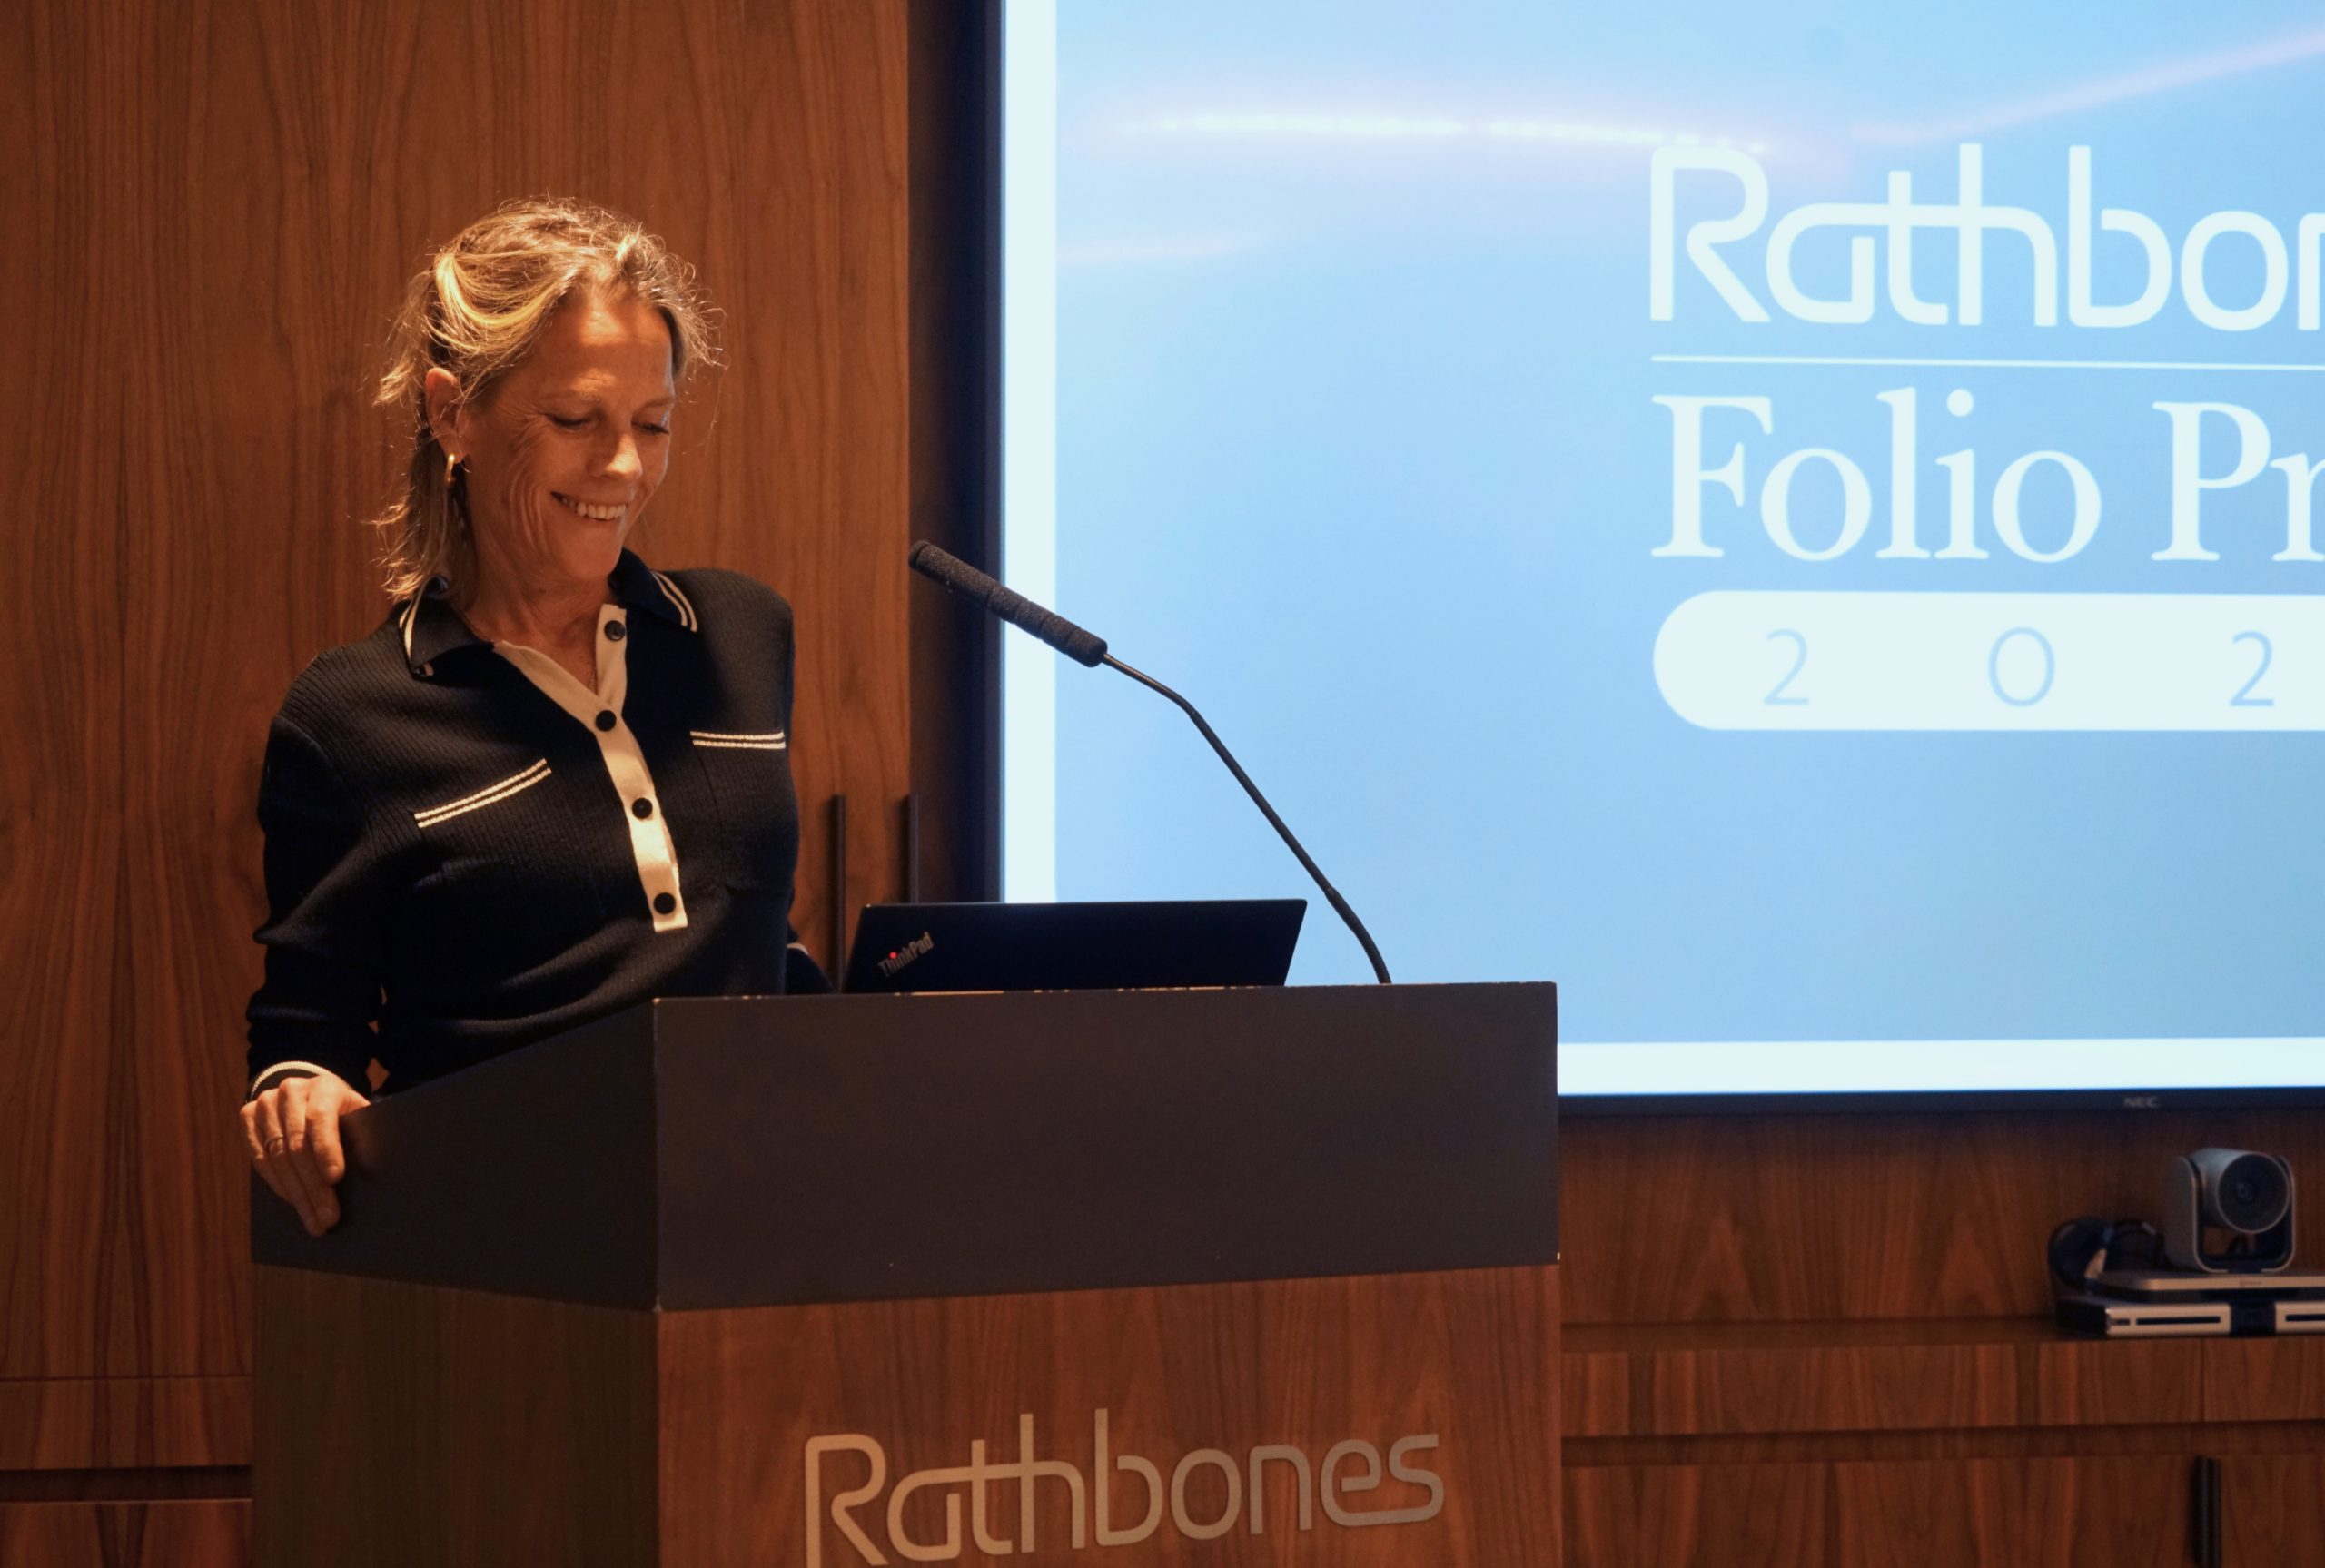 Minna Fry, Executive Director, the Rathbones Folio Prize